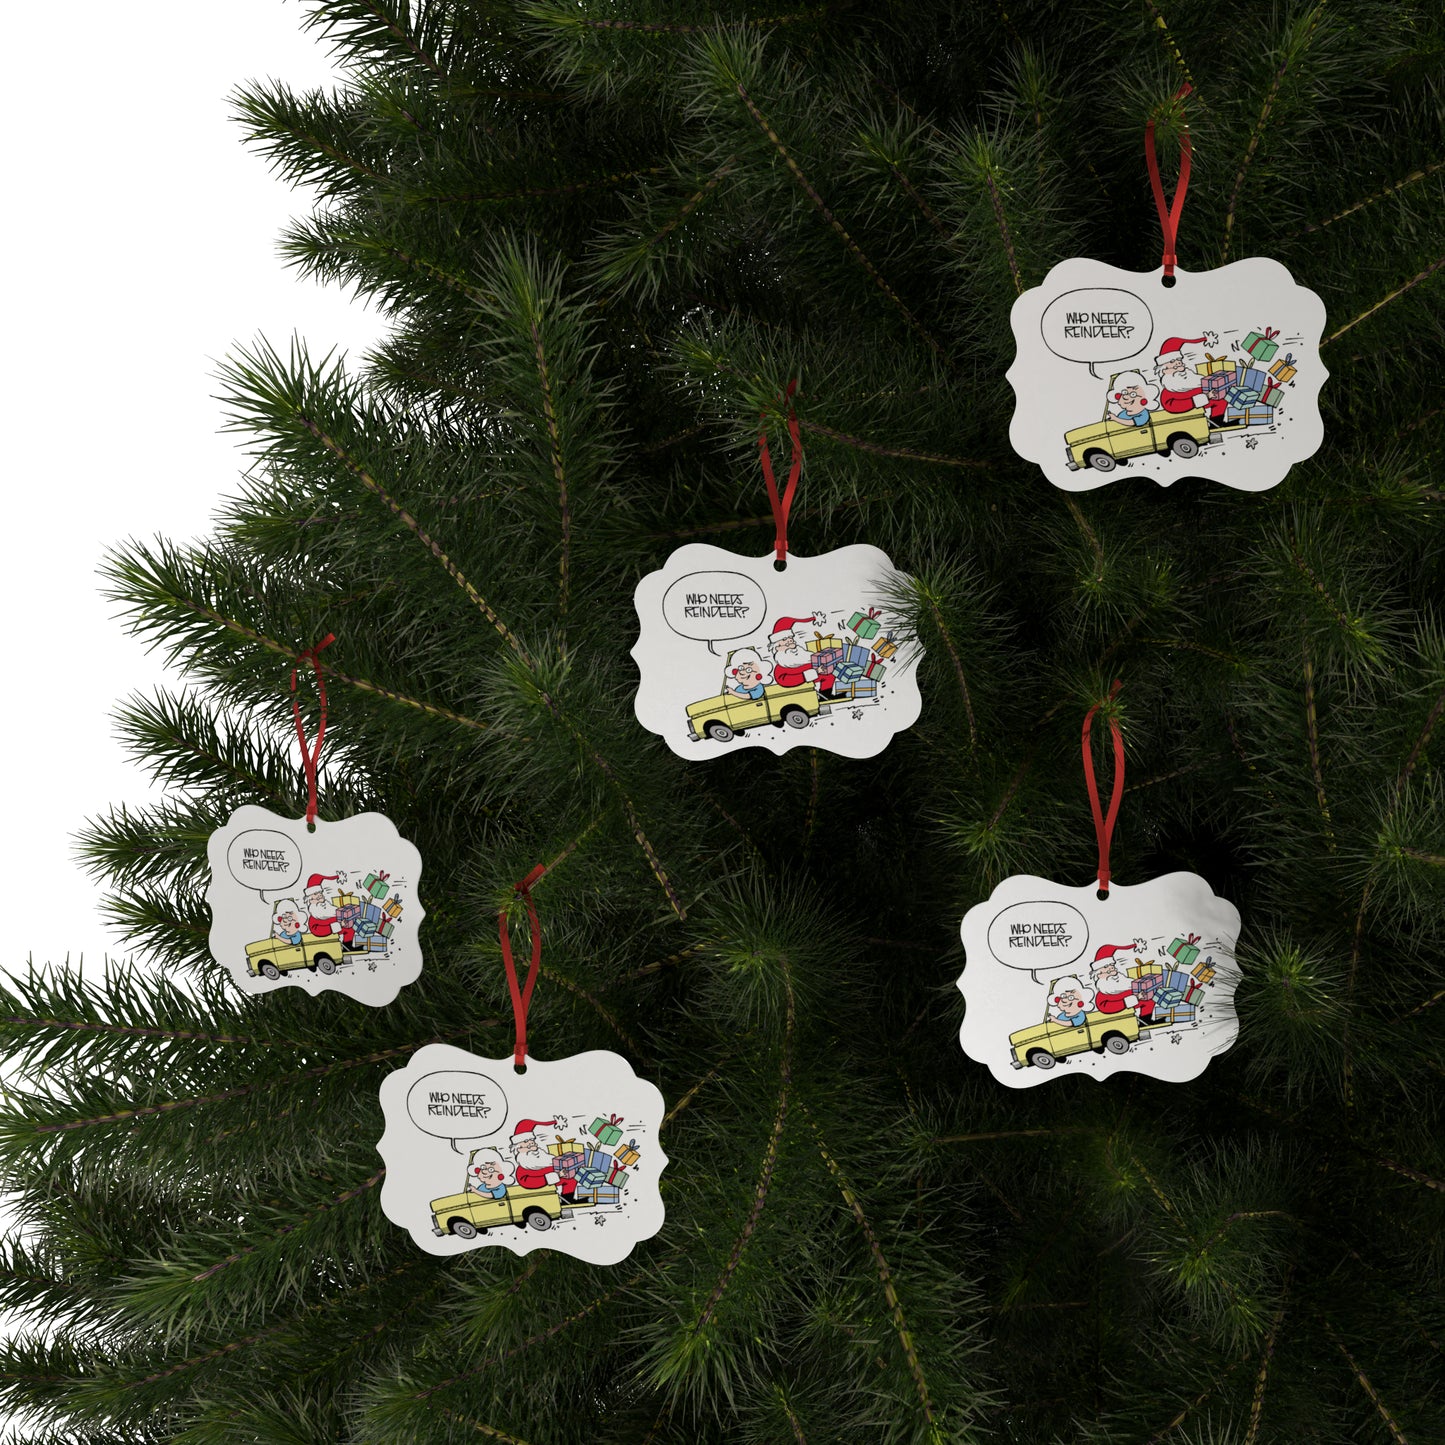 Gearhead Gertie "Who Needs Reindeer" Holiday Ornament